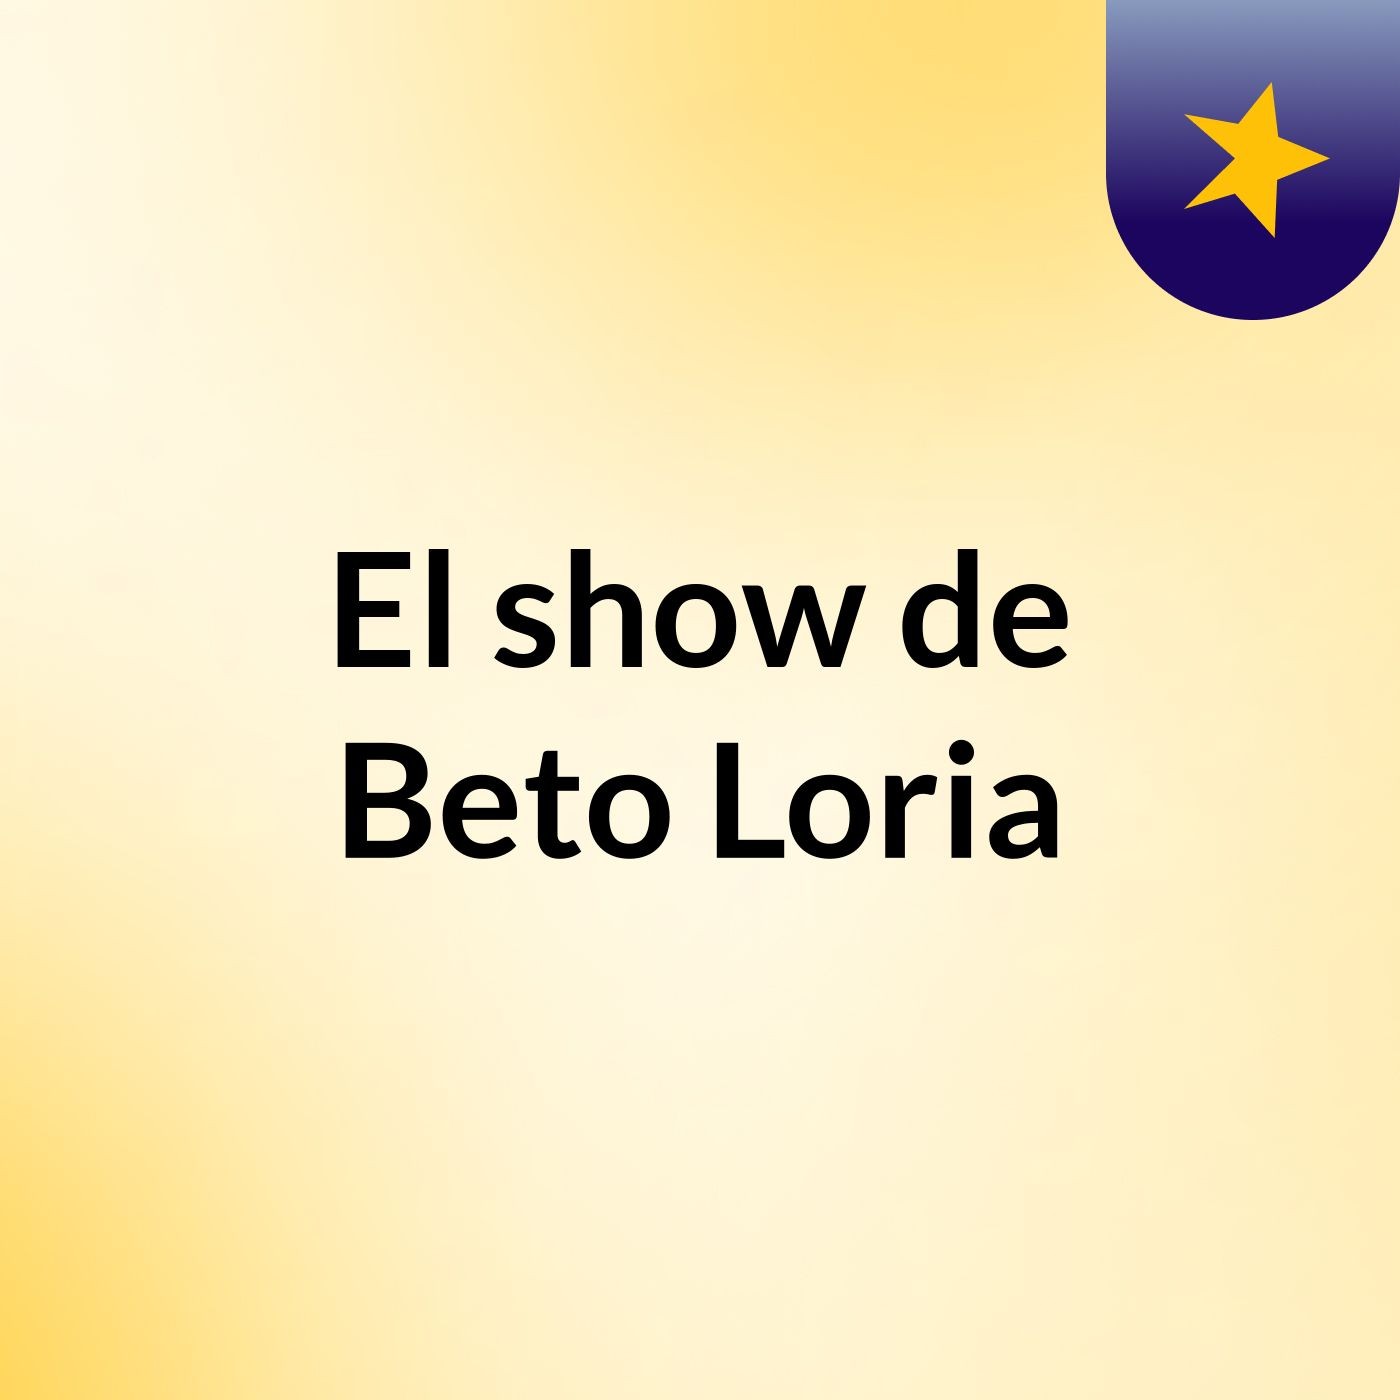 El show de Beto Loria